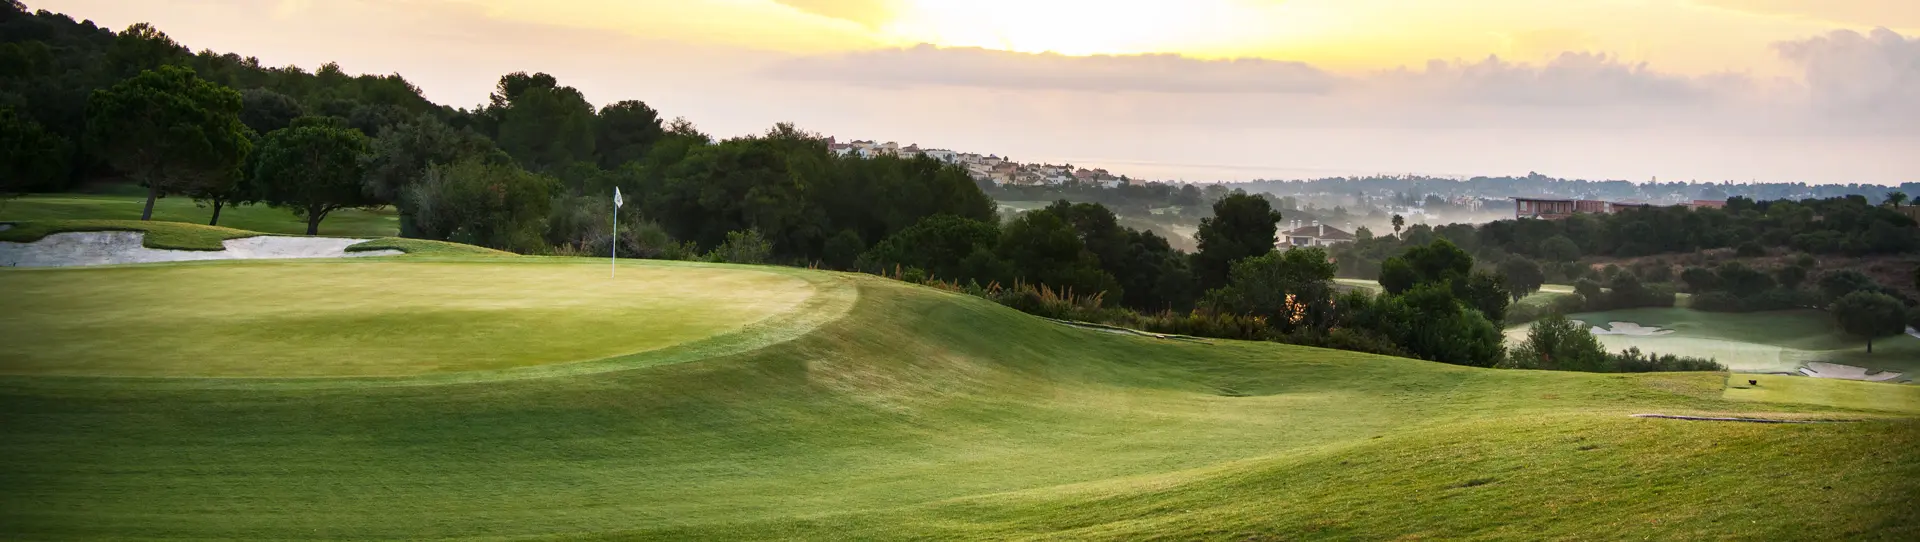 Spain golf courses - La Reserva at Sotogrande - Photo 3